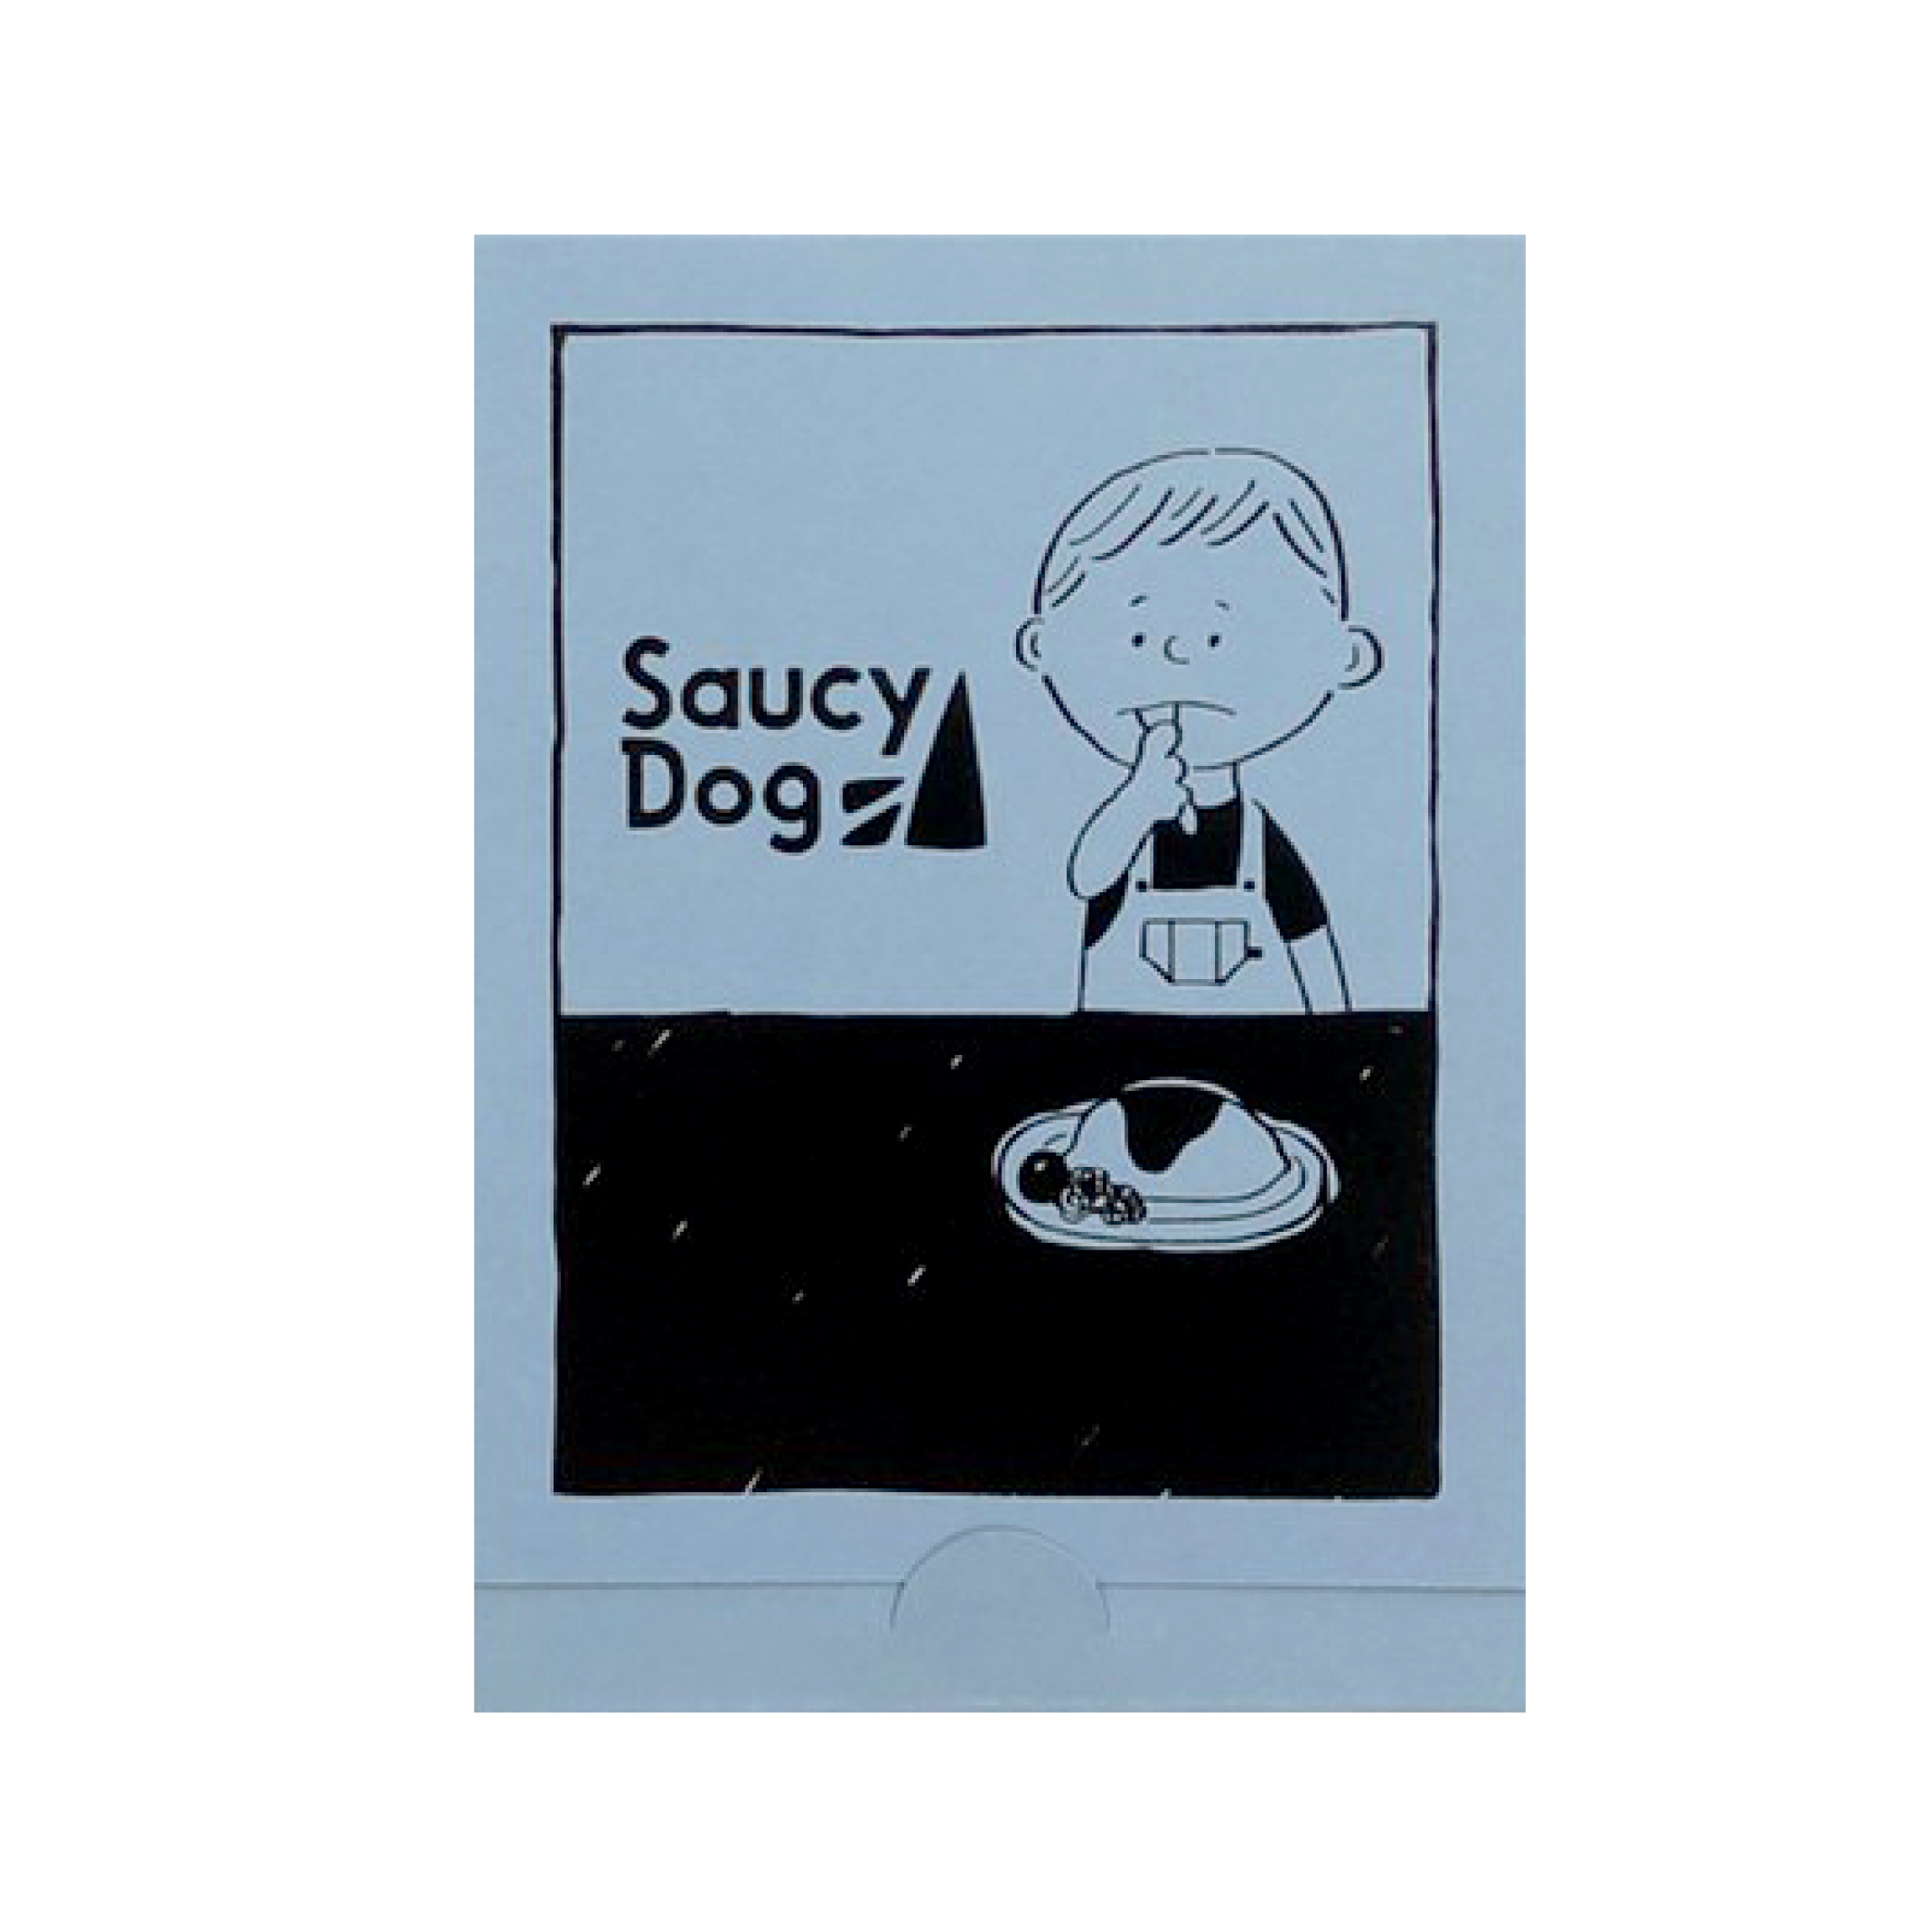 Saucy Dog